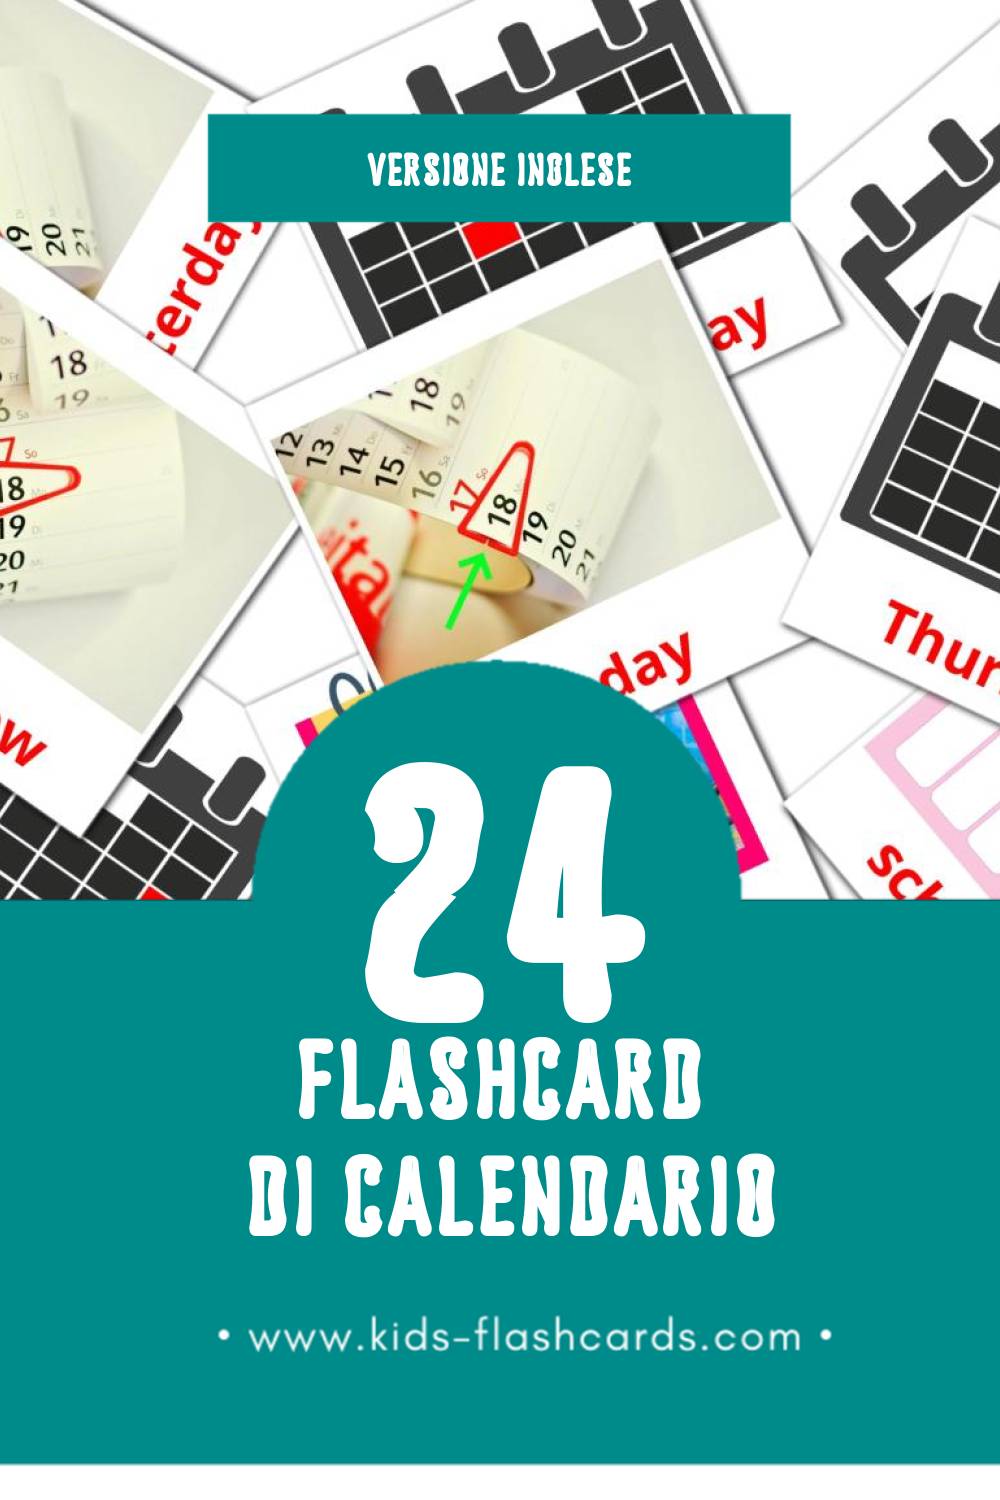 Schede visive sugli Calendar per bambini (24 schede in Inglese)